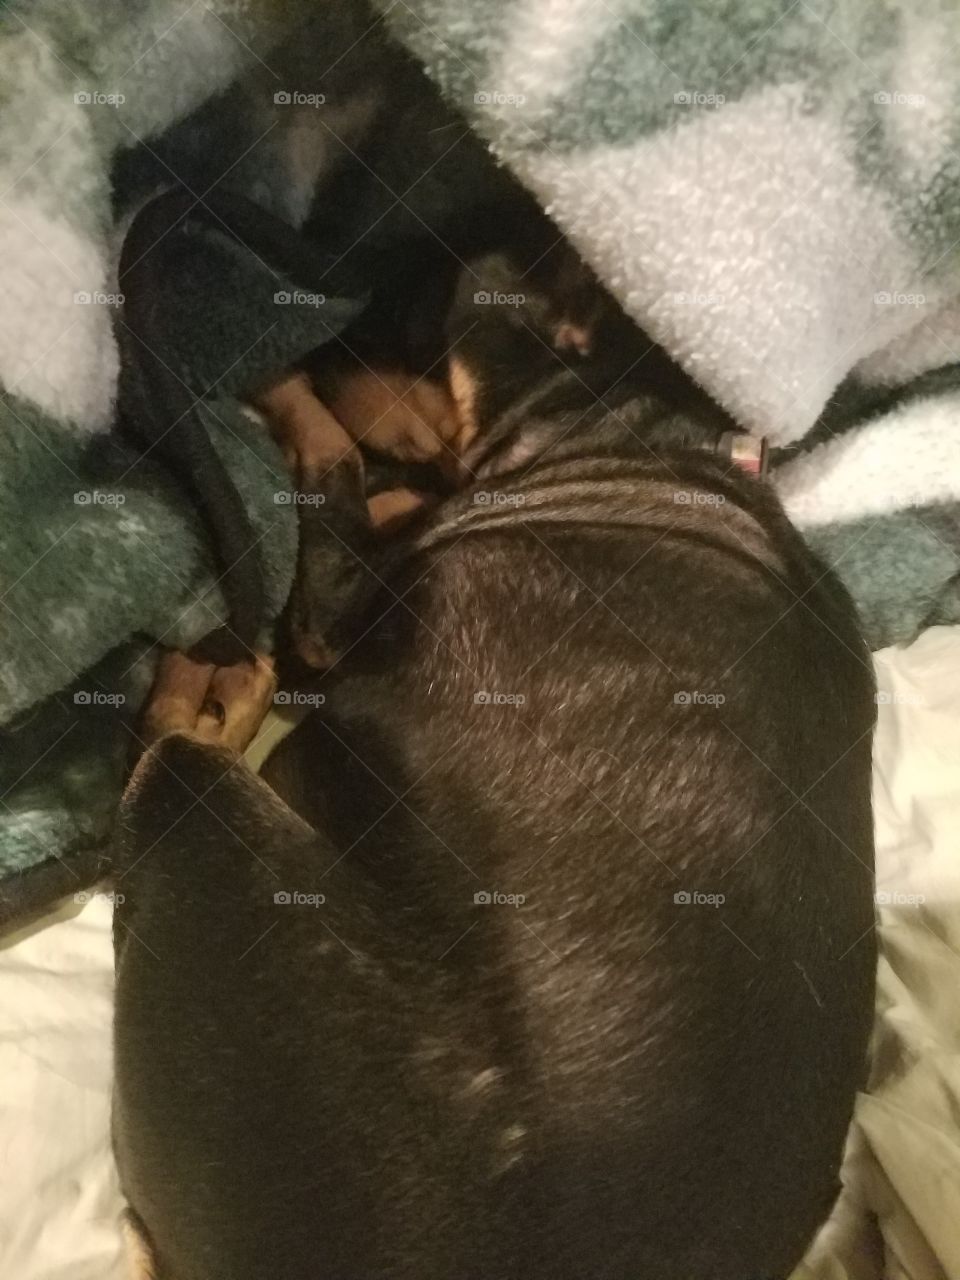 Miniature Pinscher cuddling up to some blankets